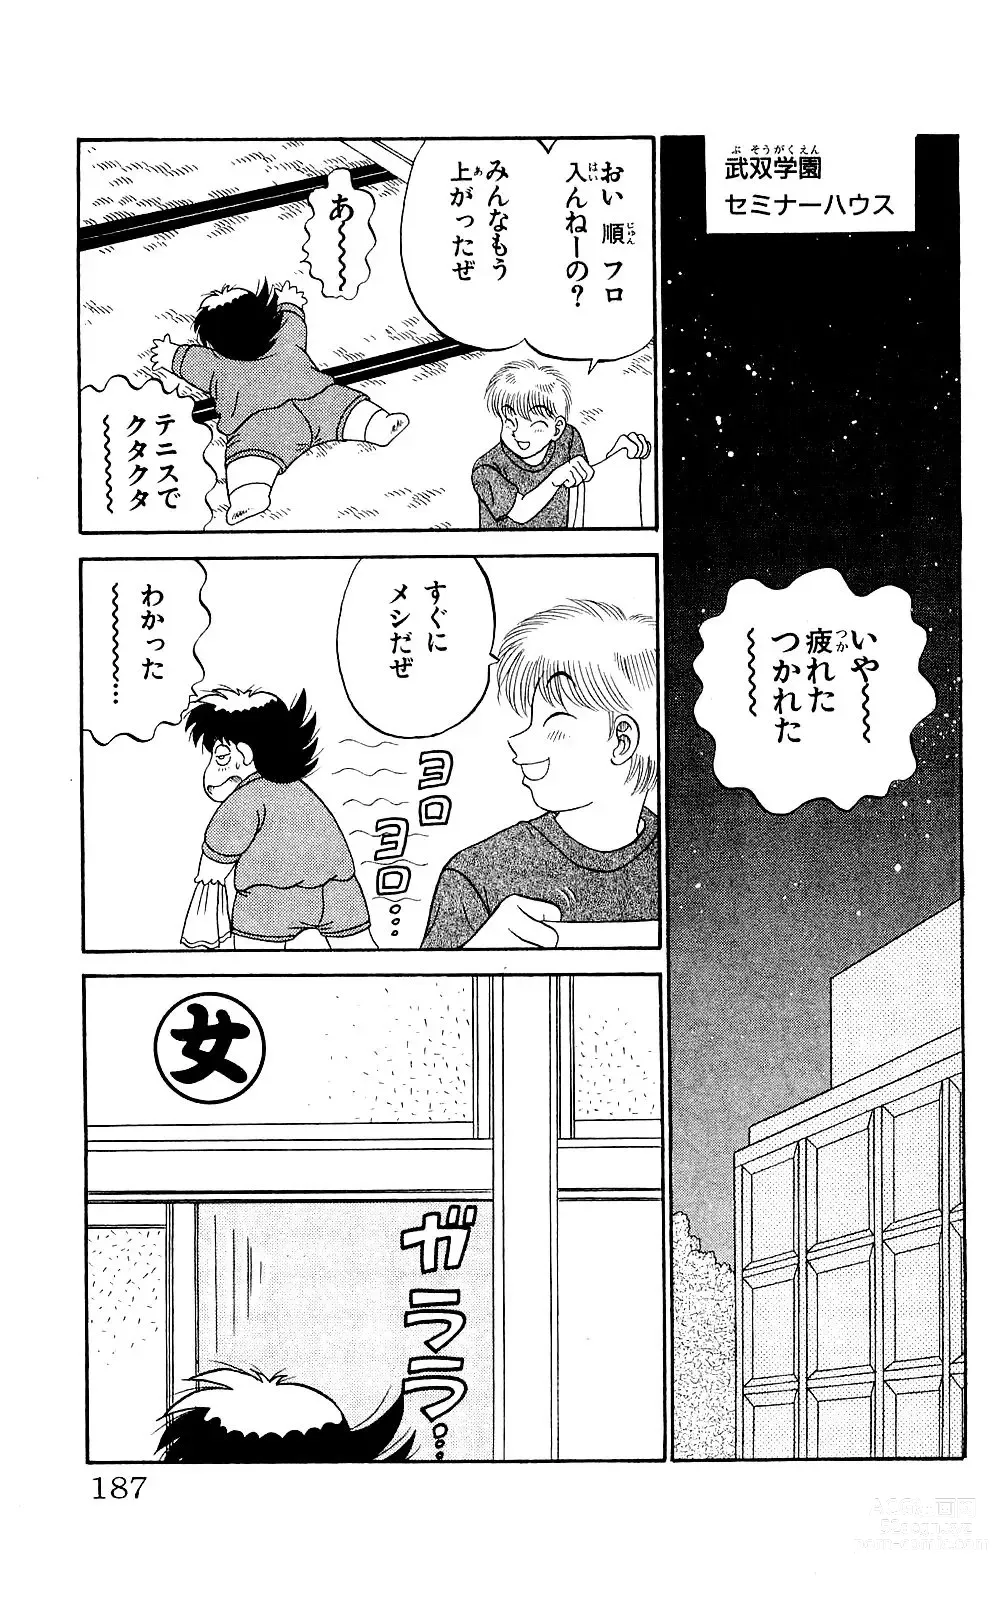 Page 185 of manga Orette Piyoritan 07